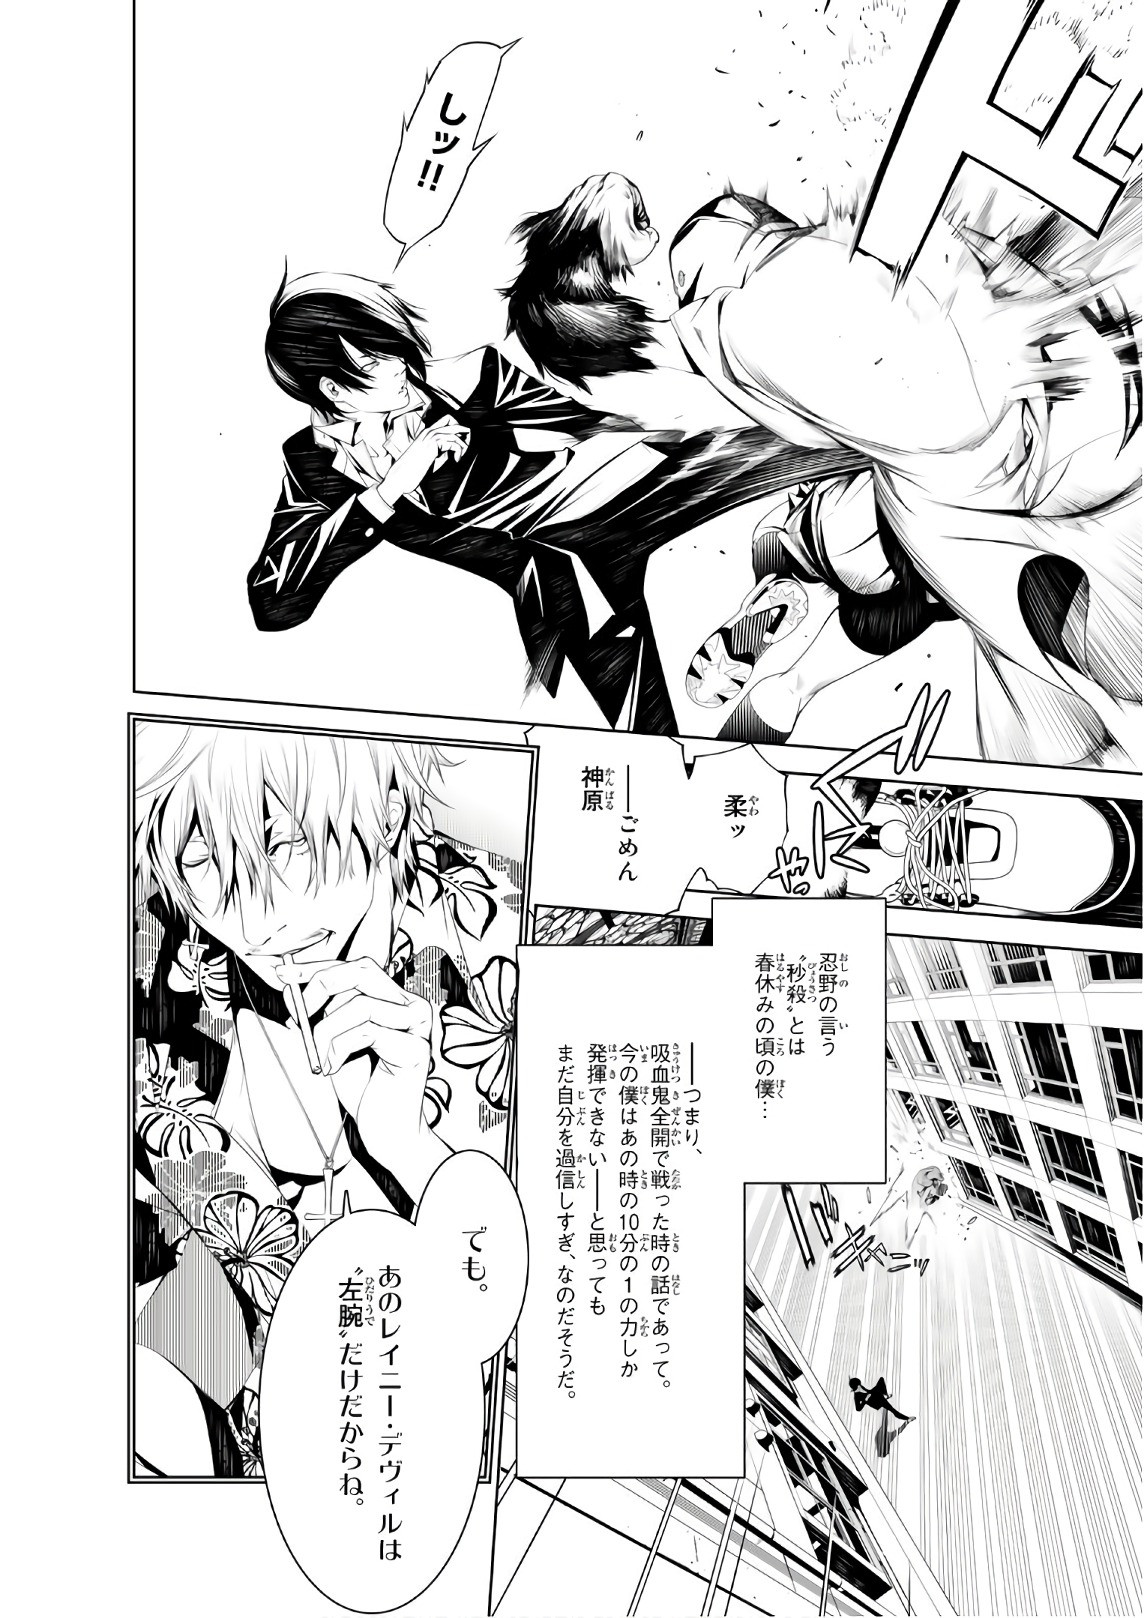 Bakemonogatari - Chapter 38 - Page 4